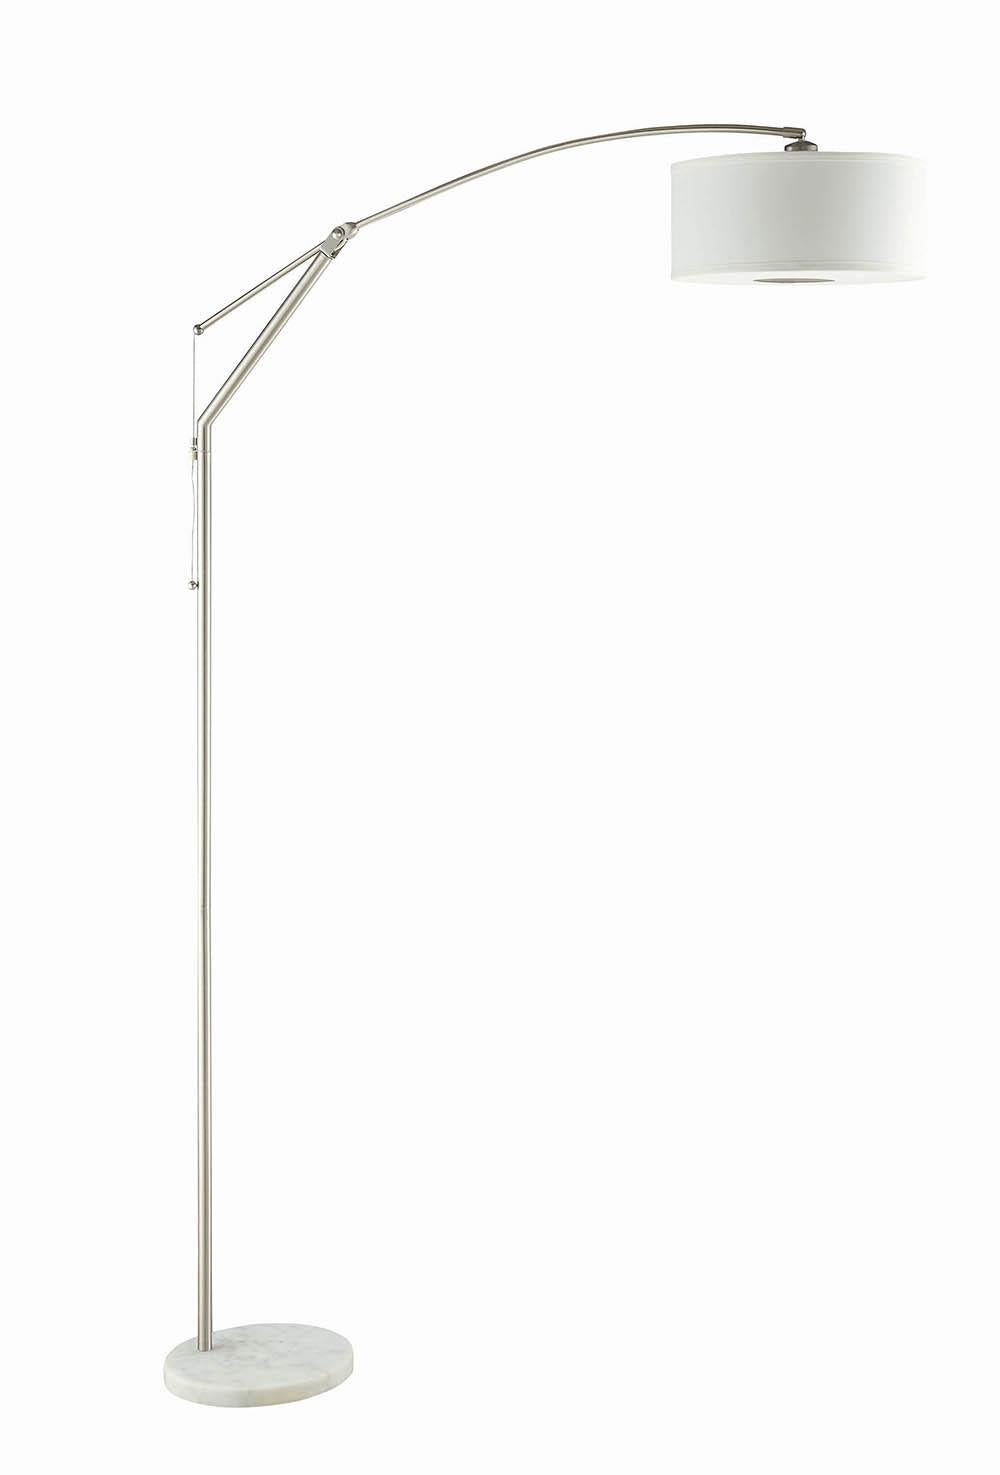 Moniz Adjustable Arched Arm Floor Lamp Chrome and White  Half Price Furniture